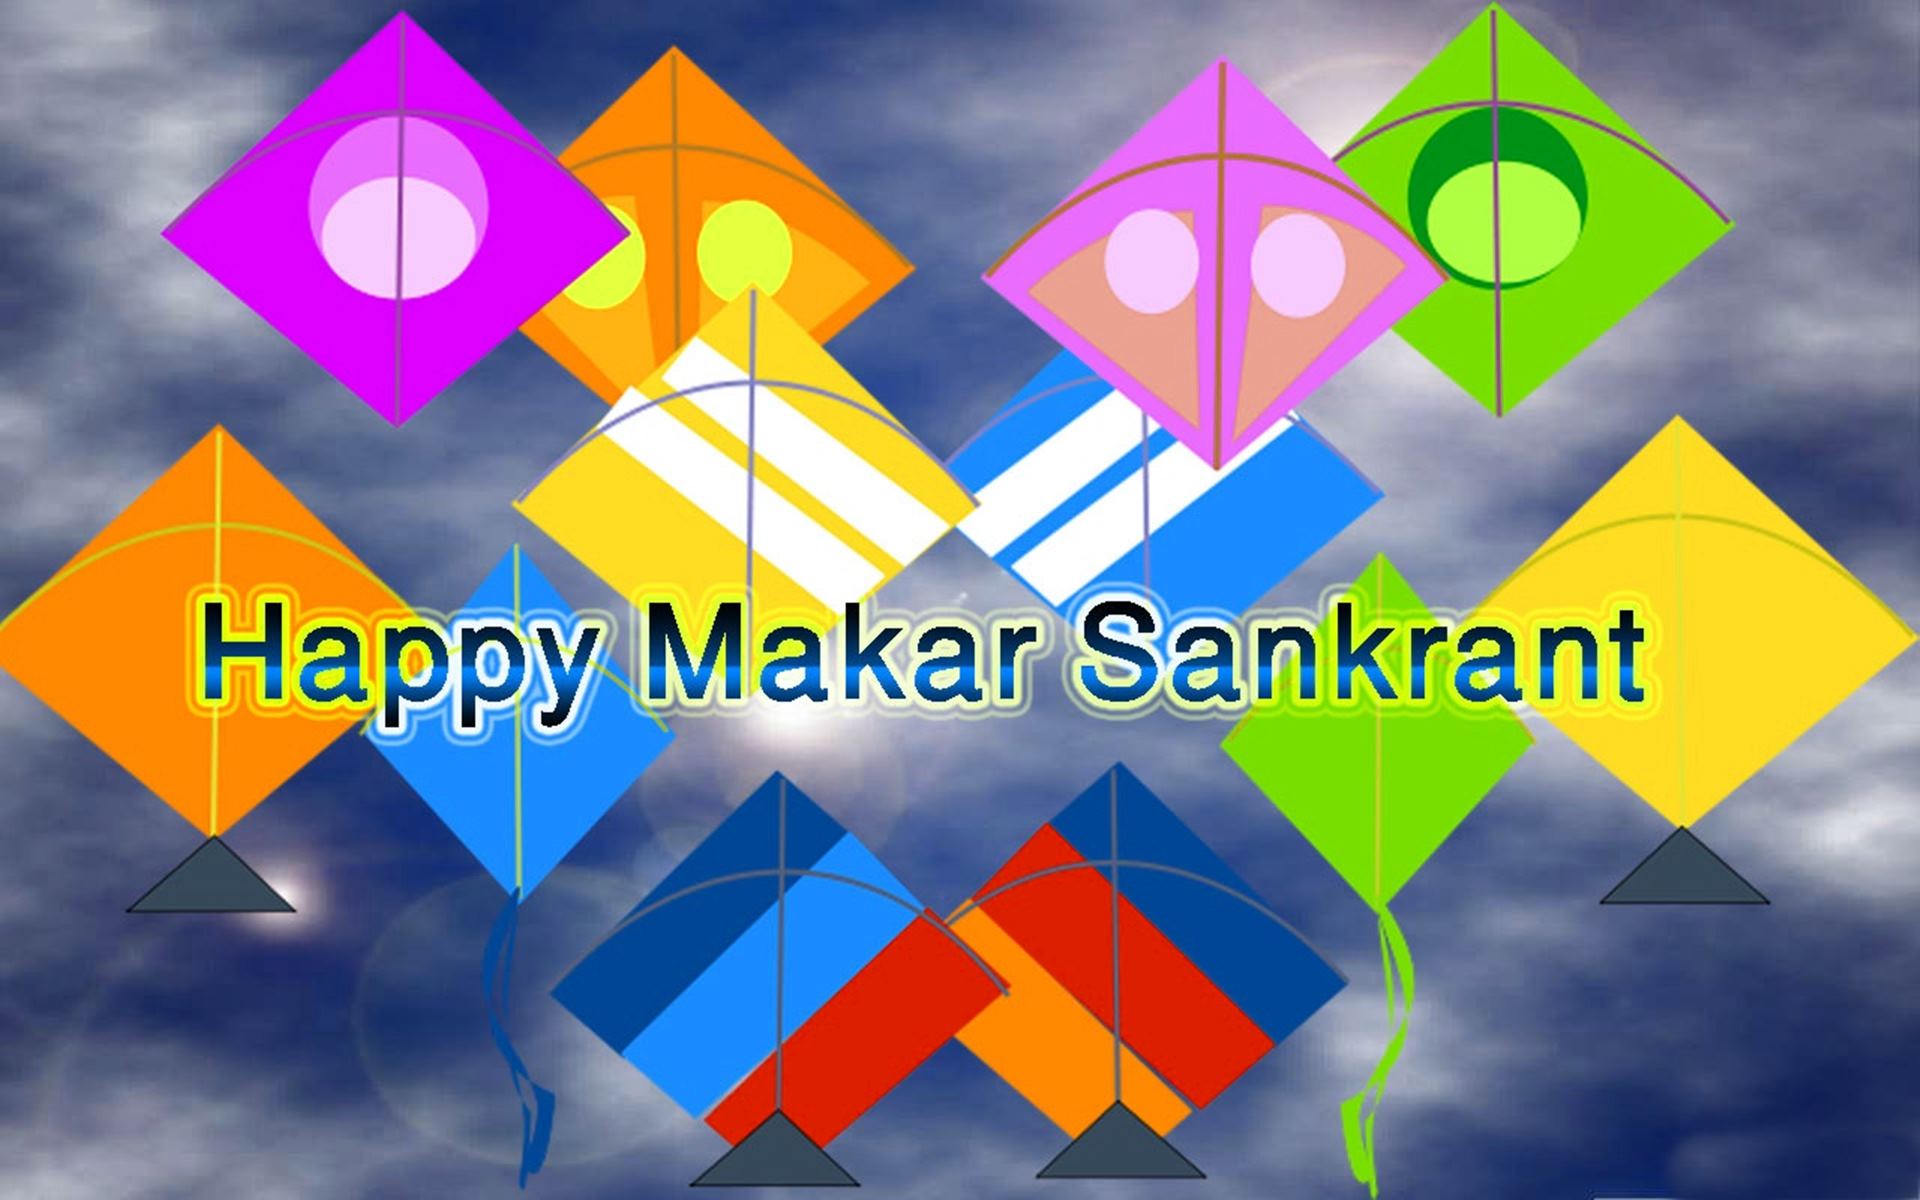 Happy Makar Sankranti Images 2018 HD Wallpapers And ...